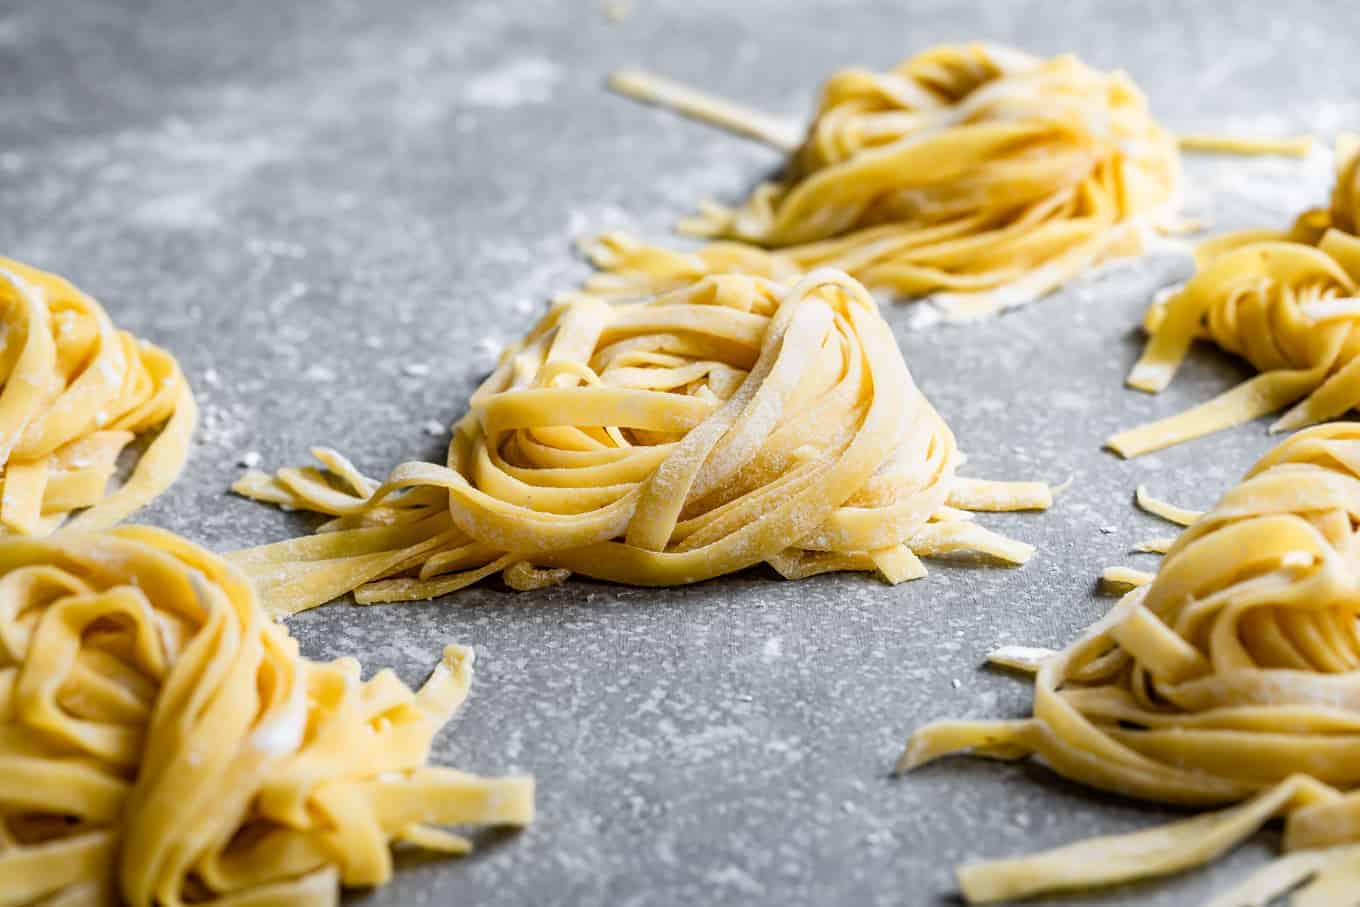 How to make Gluten-Free Pasta